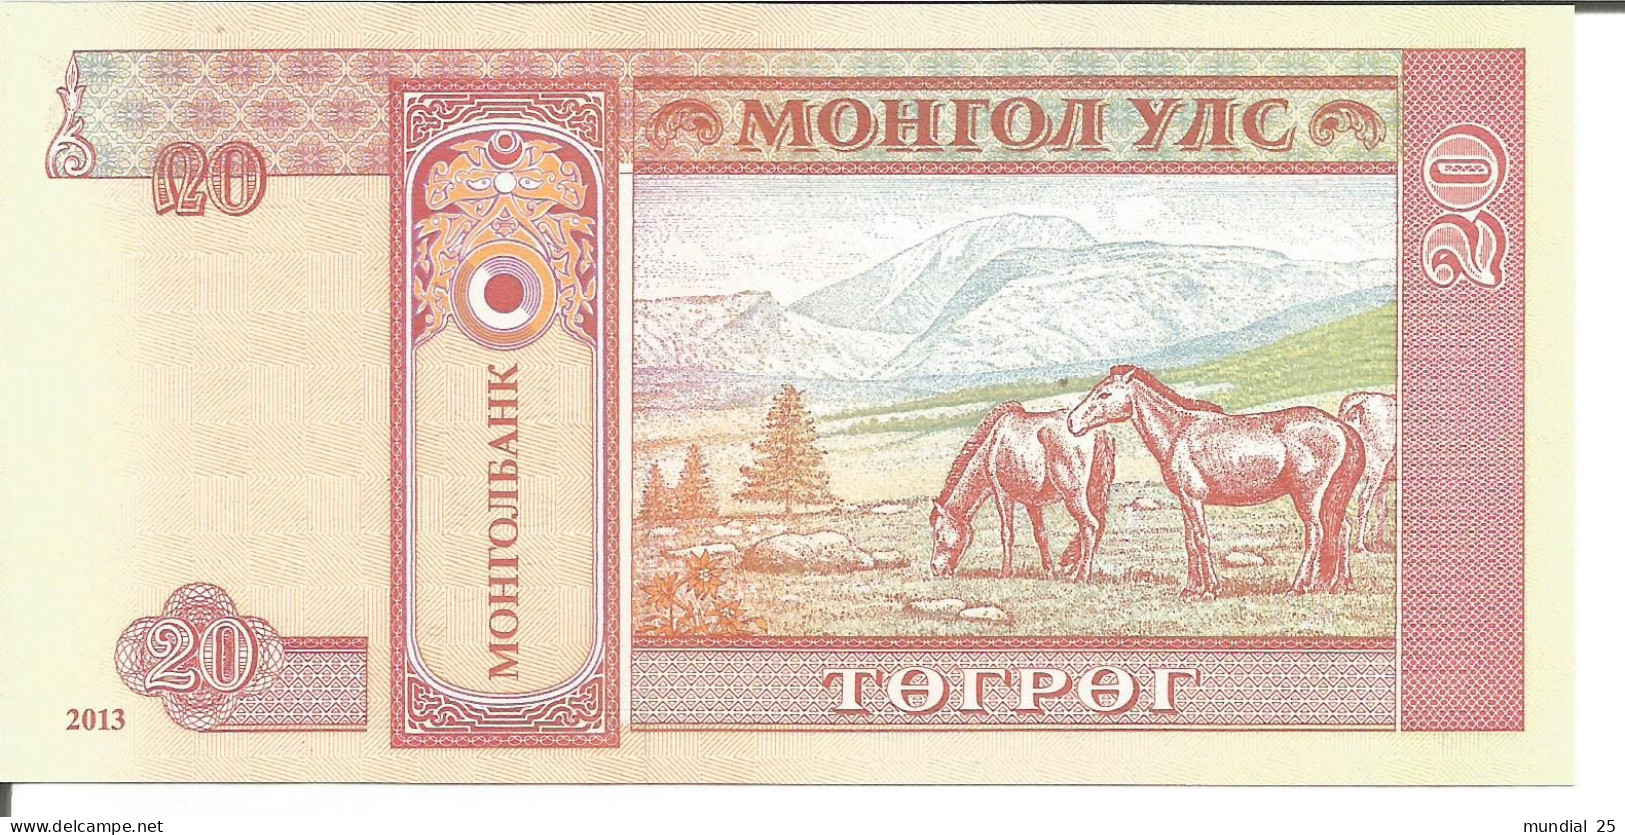 3 MONGOLIA NOTES 20 TUGRIK 2013 - Mongolië